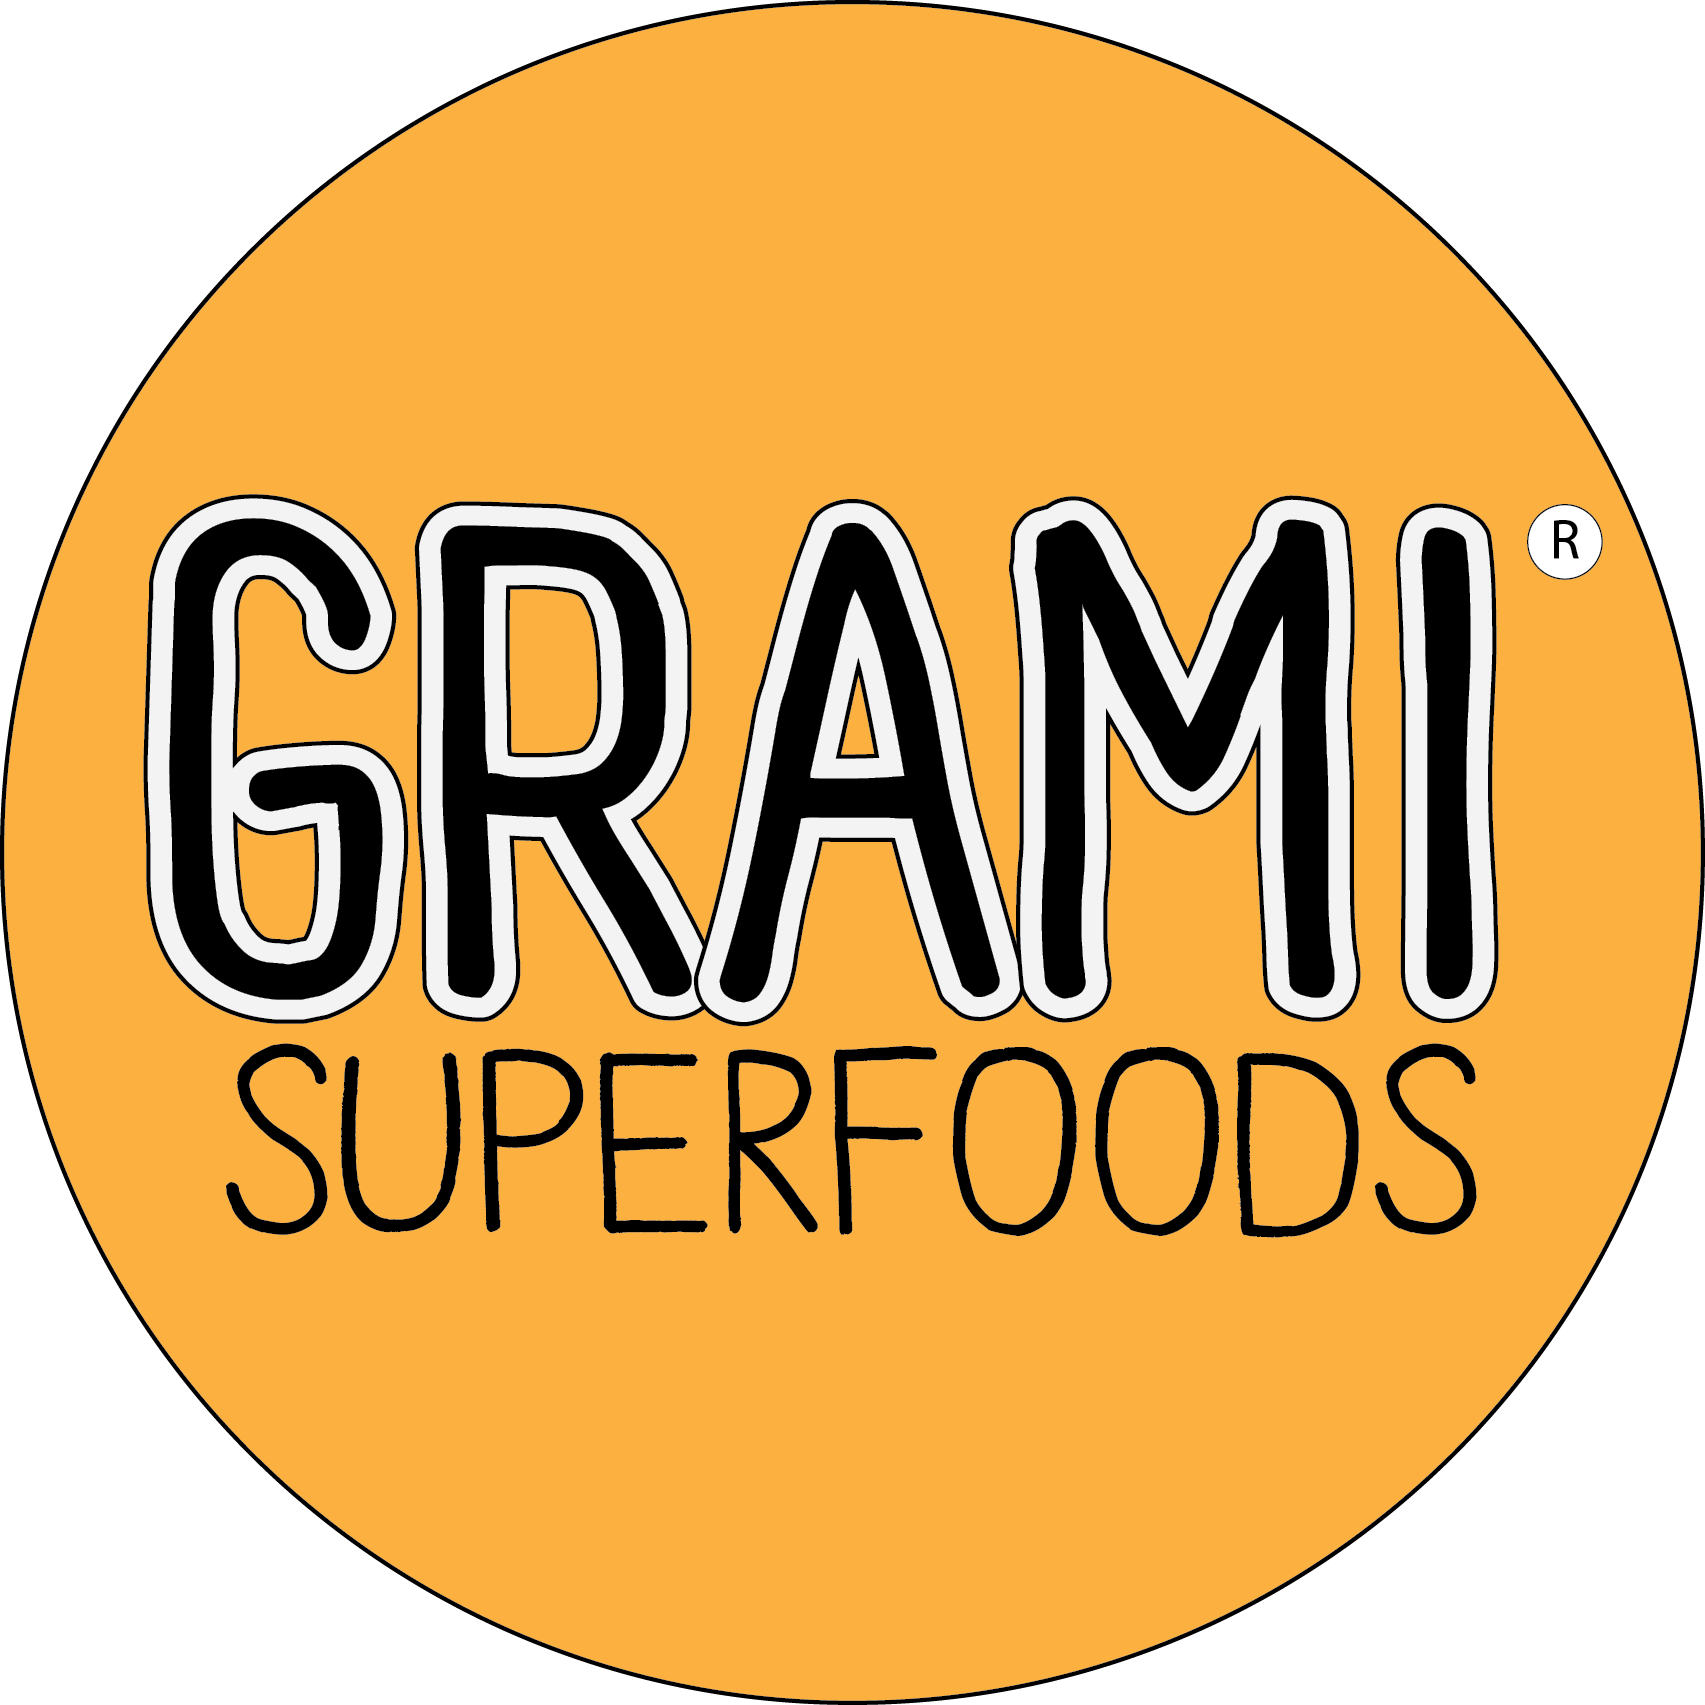 Grami Superfoods logo